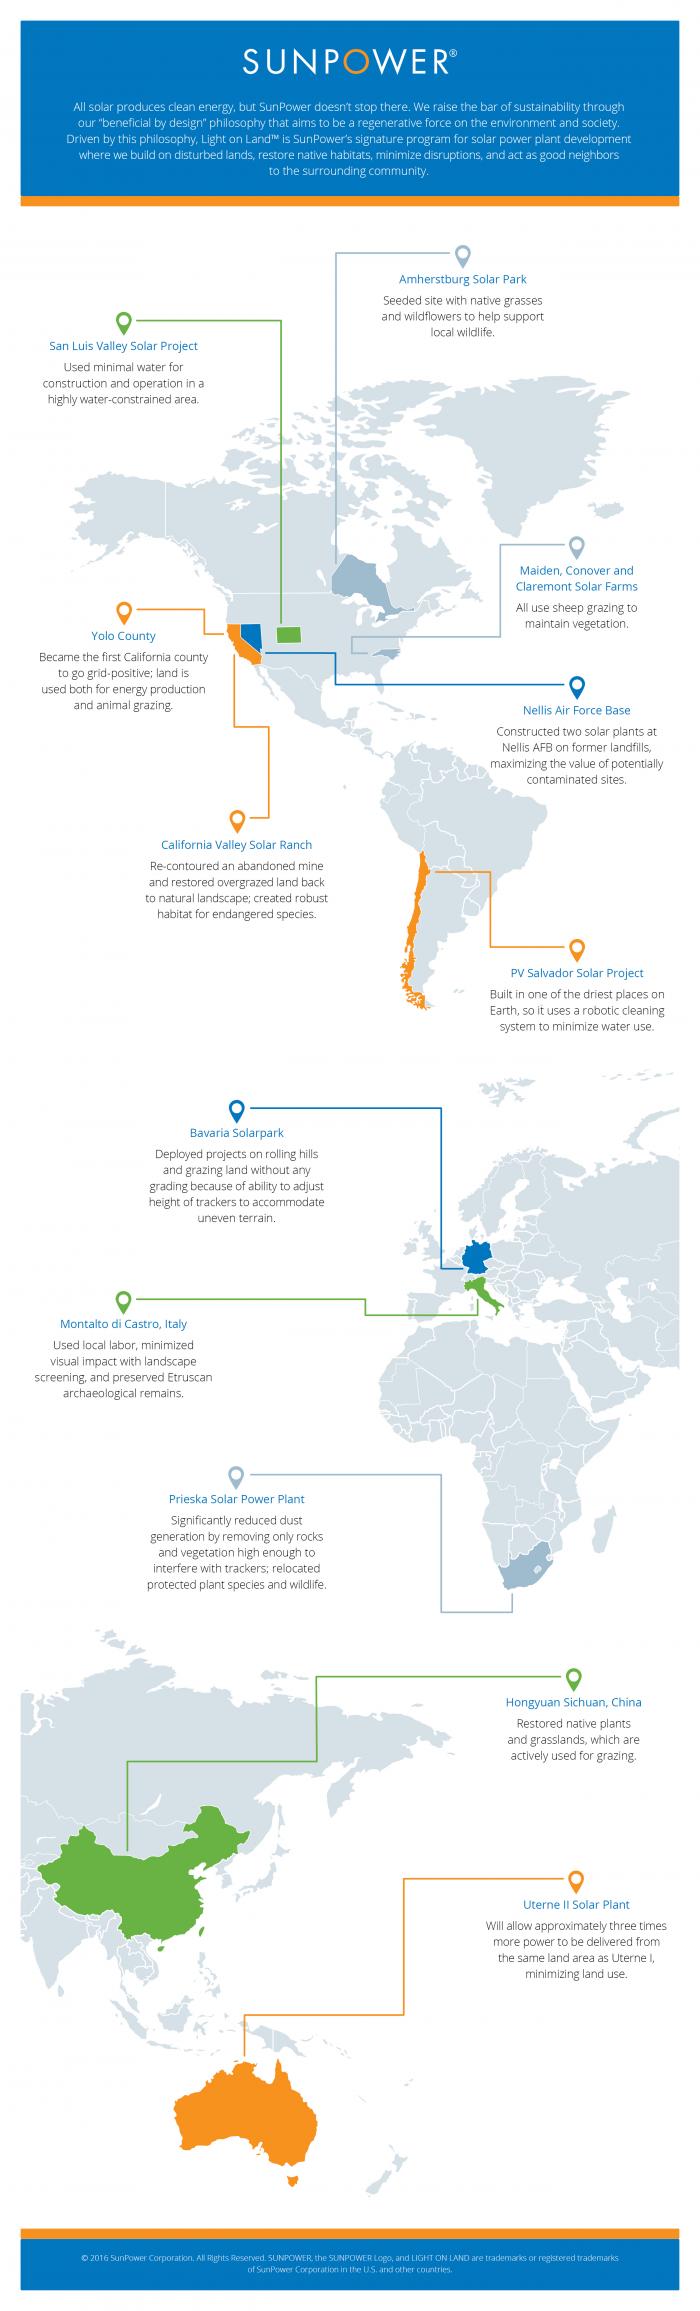 SunPower world map of sustainability.